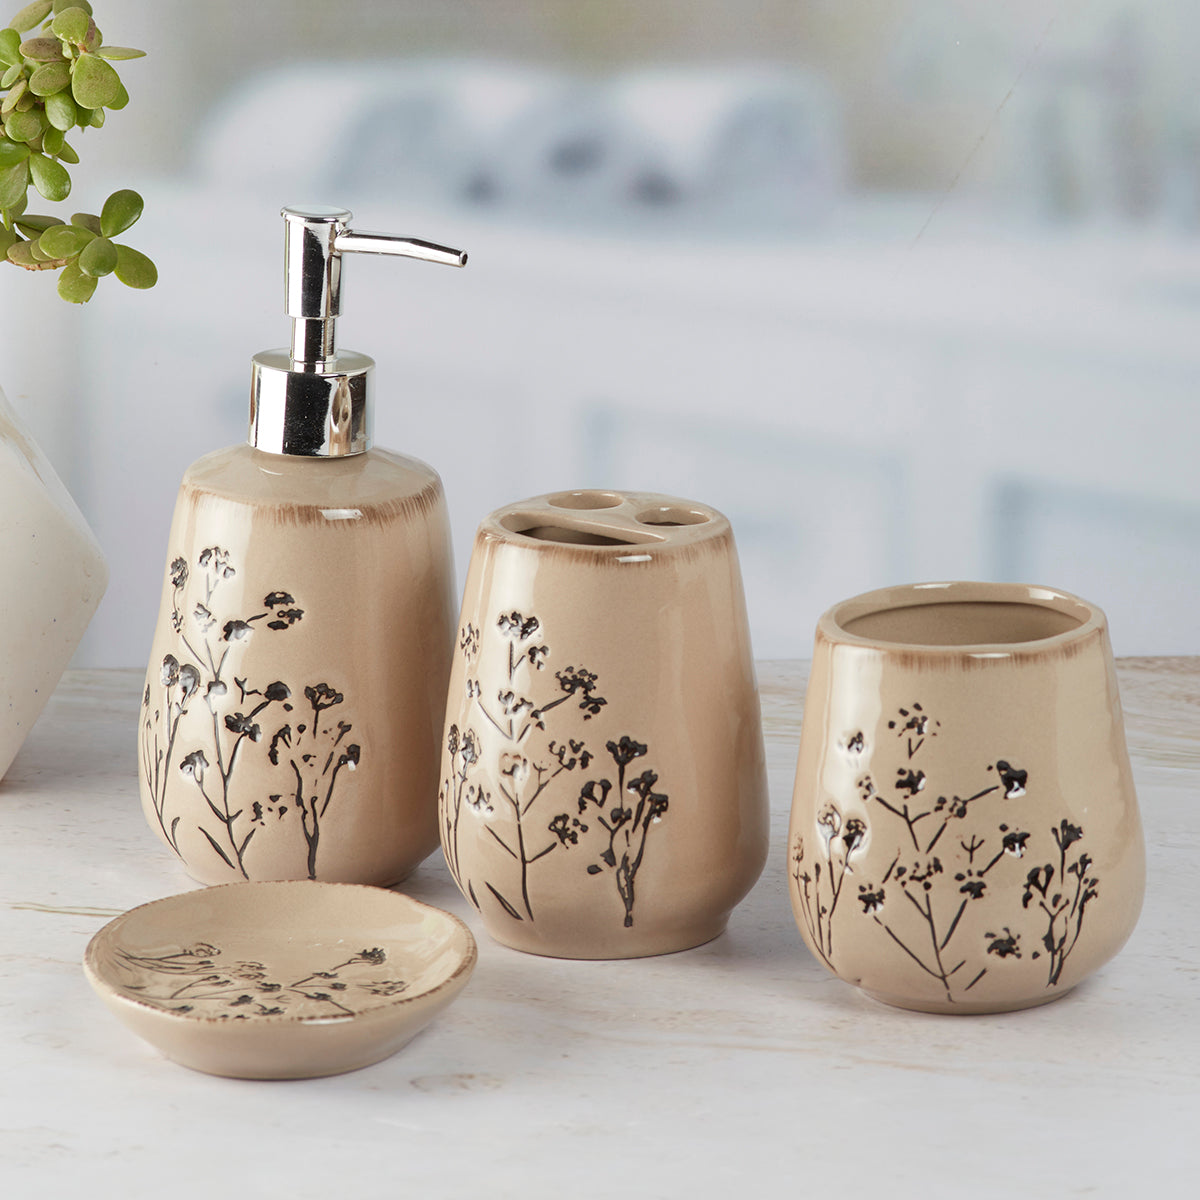 Ceramic Bathroom Accessories Set of 4 Bath Set with Soap Dispenser (9888)